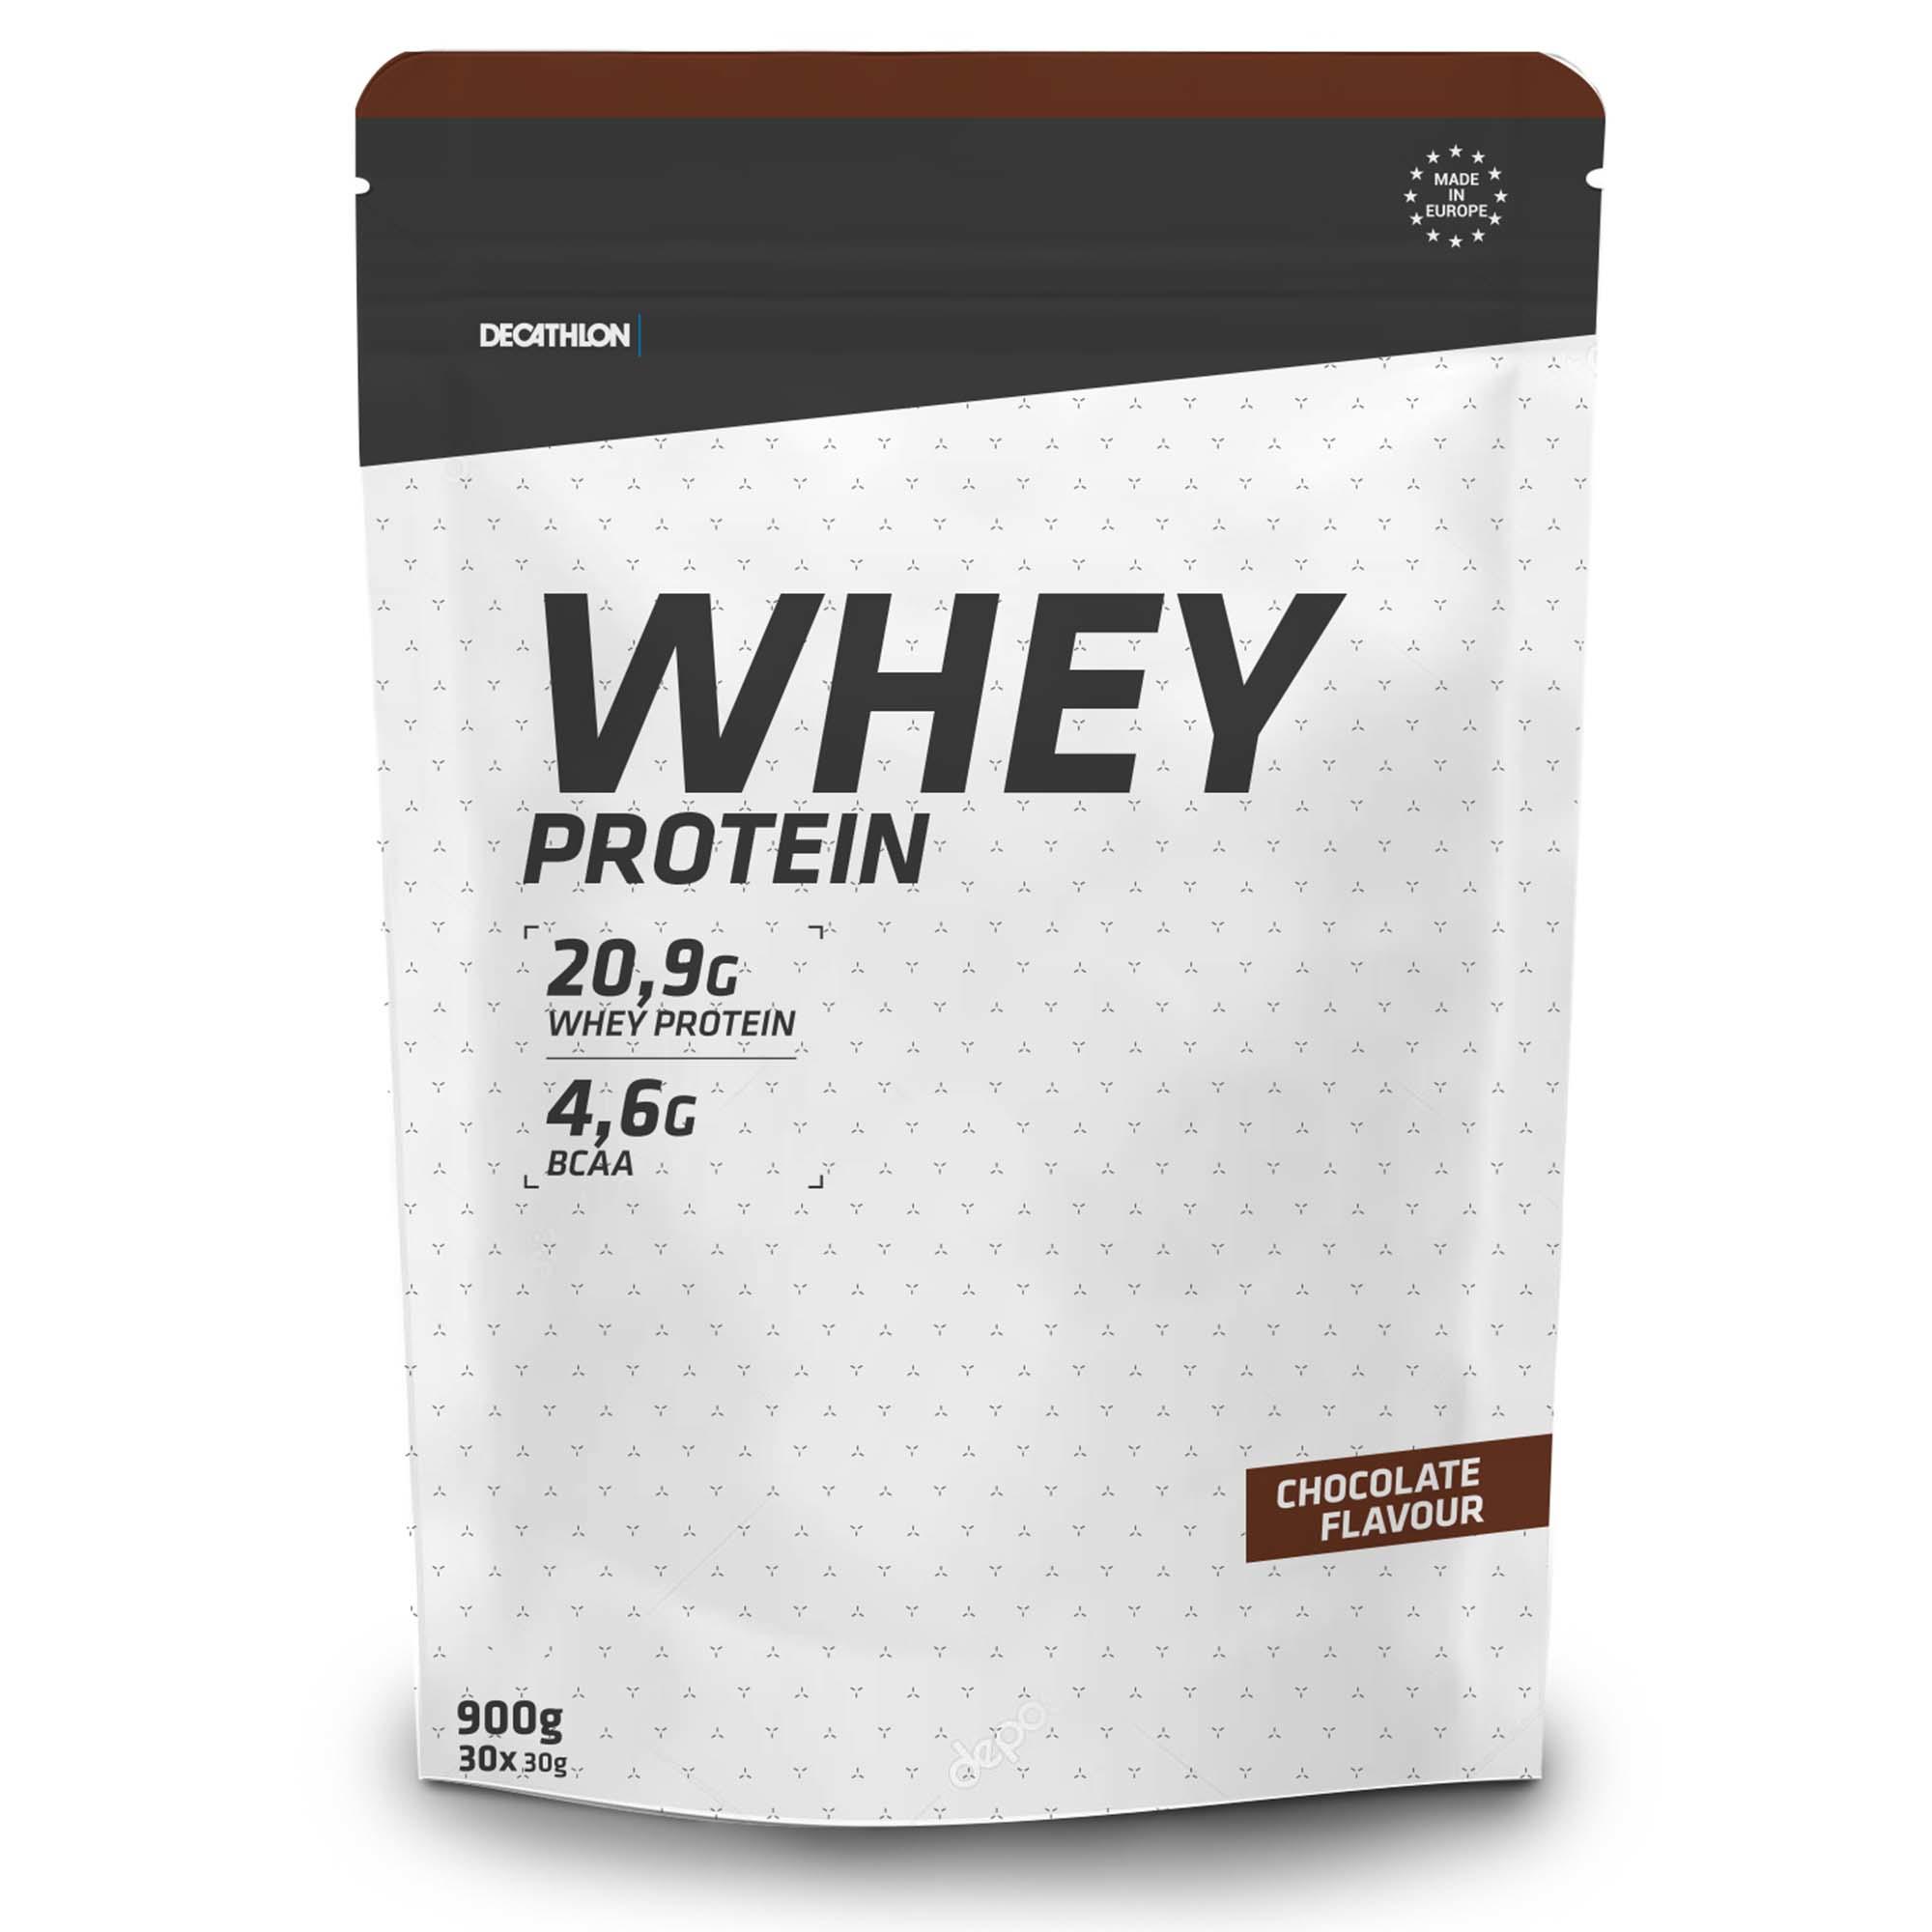 Comprar Proteinas Whey Online Decathlon